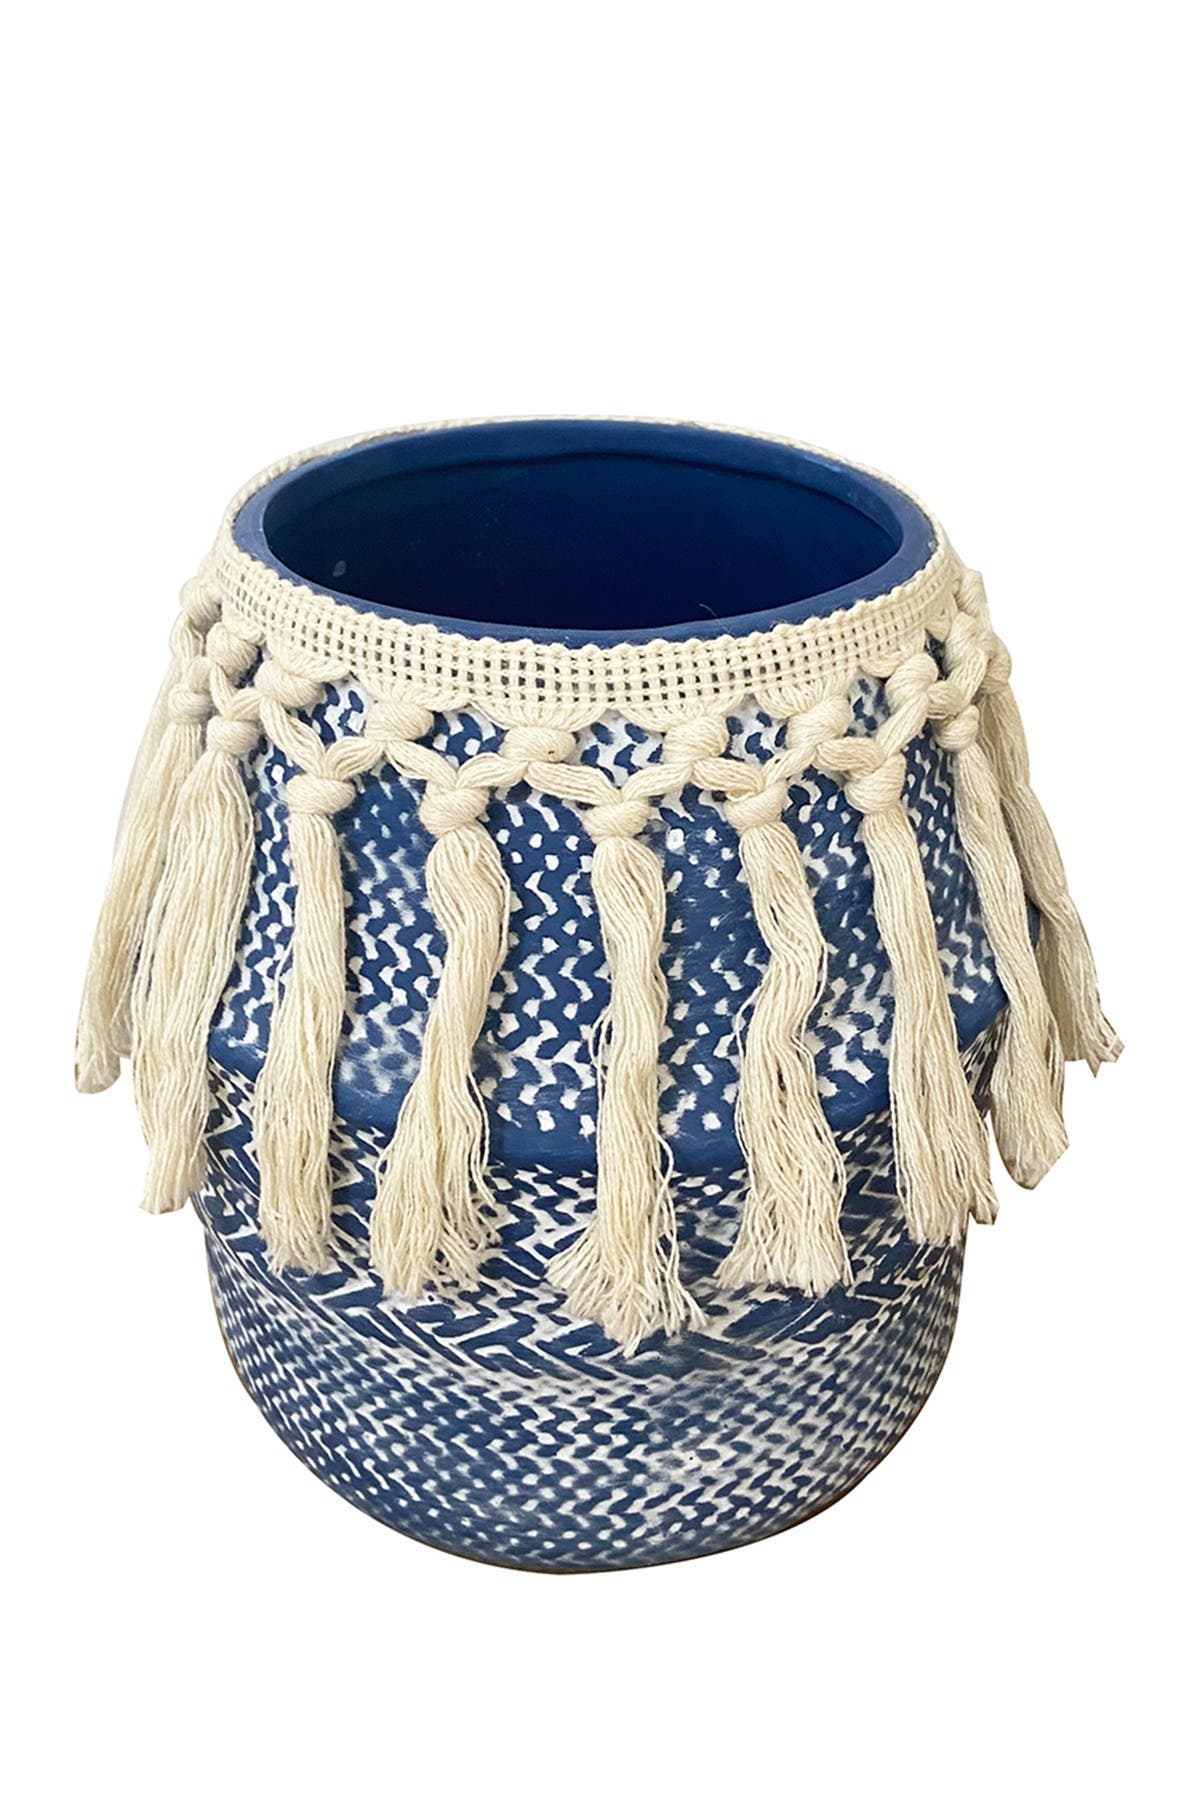 Drew Derose Designs Ceramic Woven Trim Planter In Blue/ White